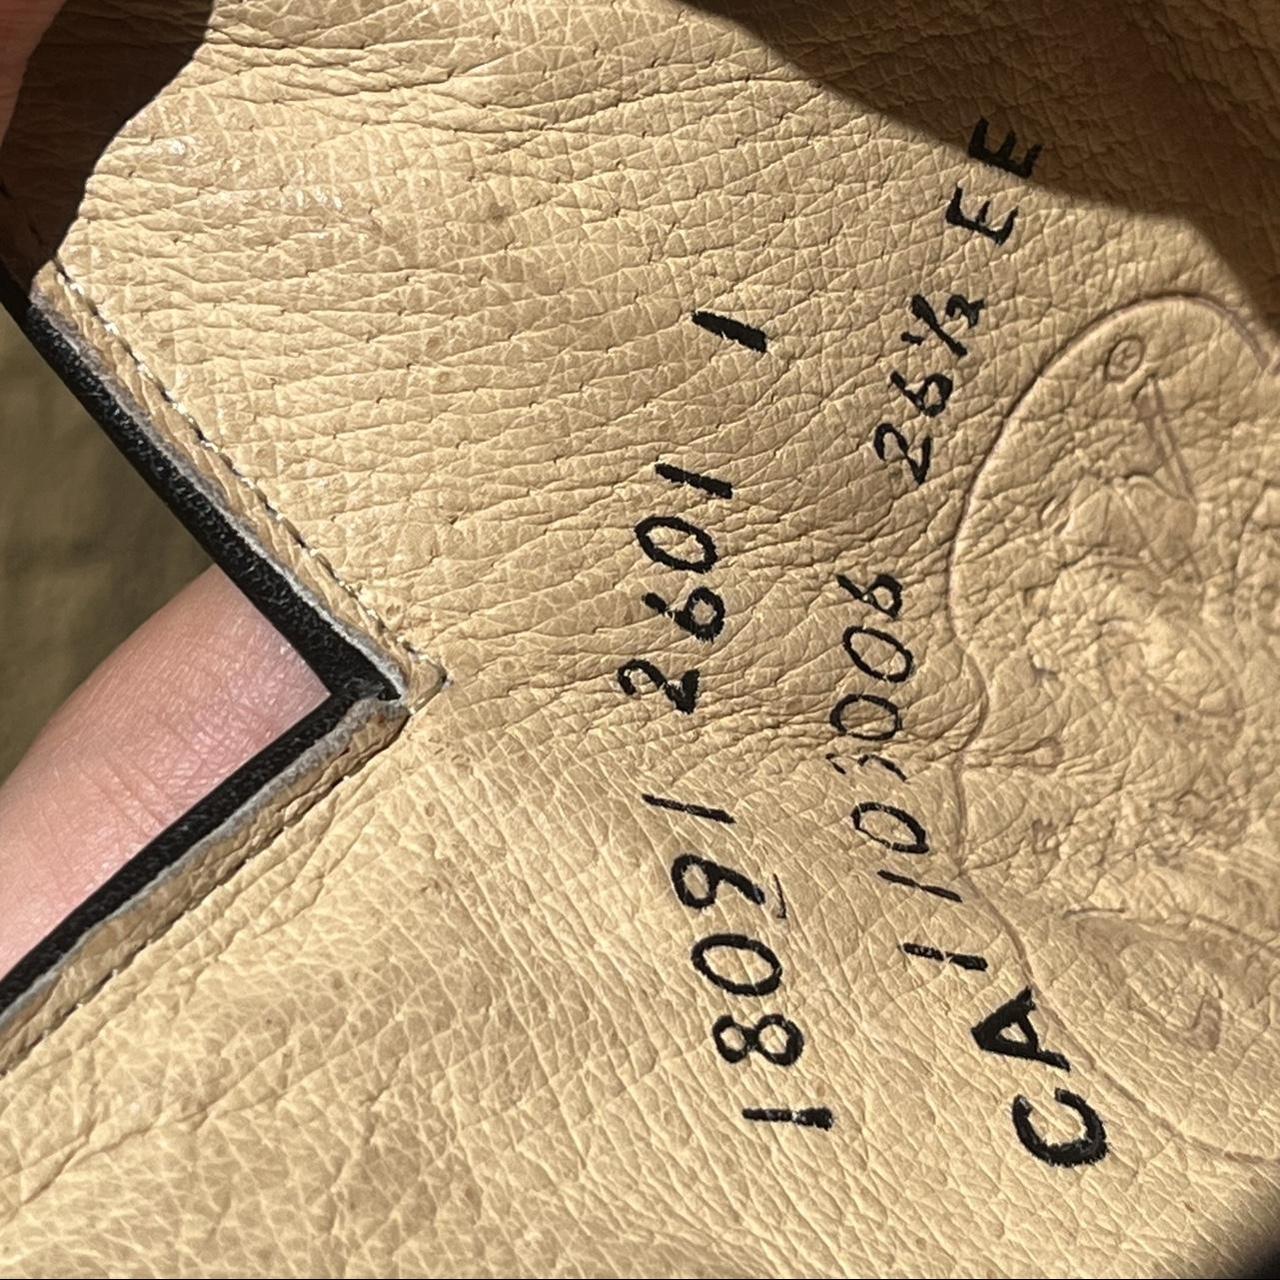 Louis Vuitton Backpack Brand New never worn Dm for - Depop